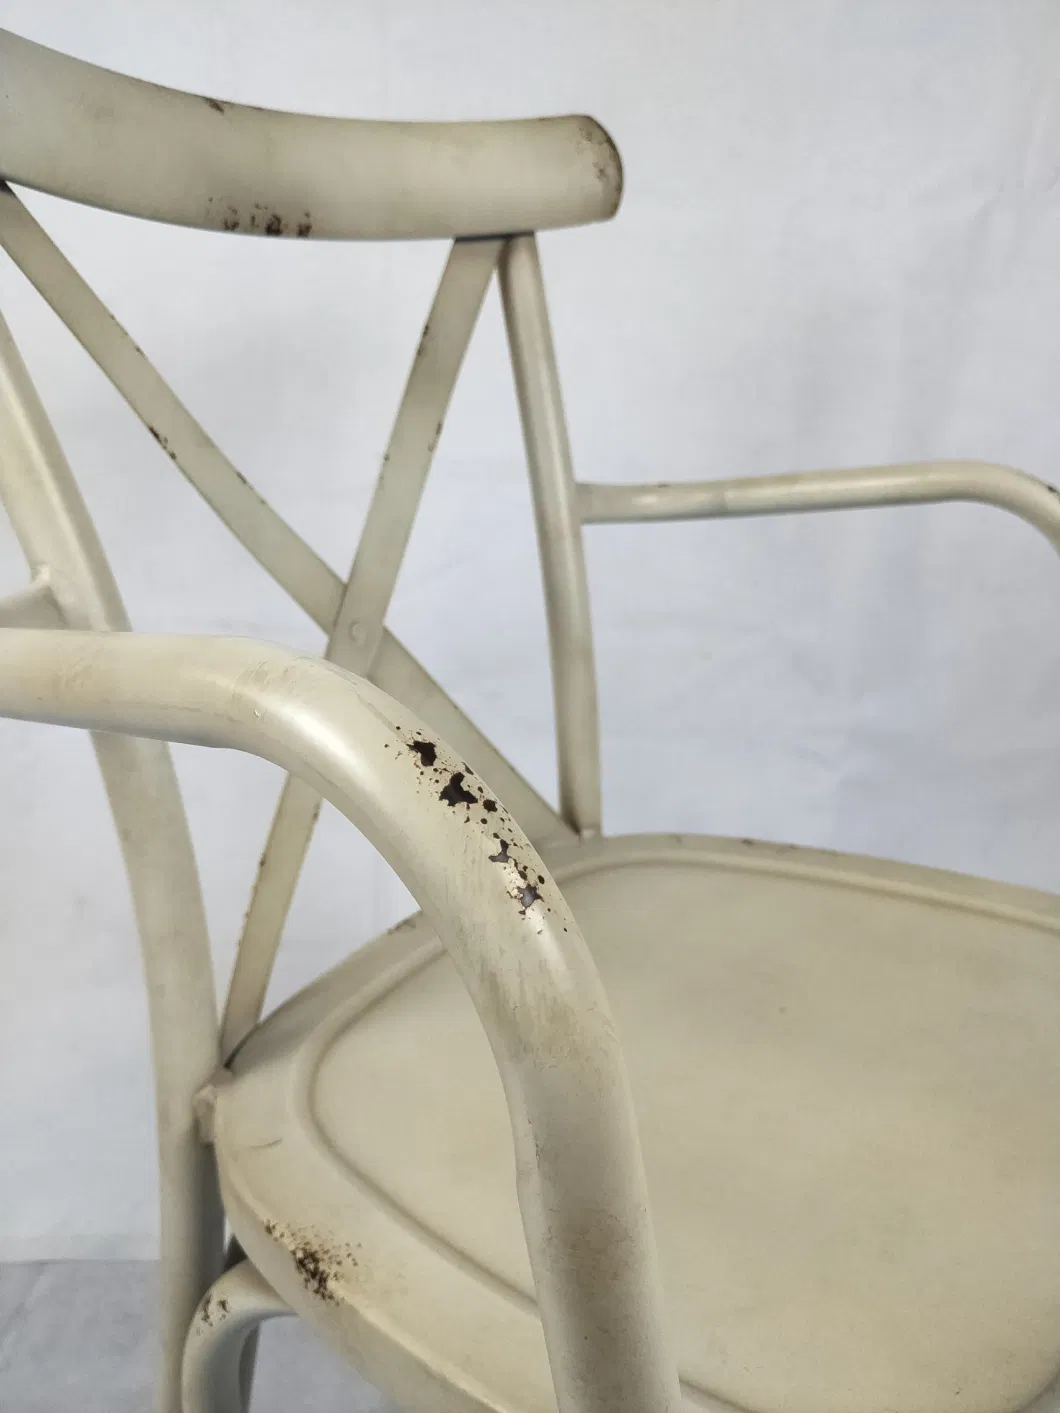 Vintage Bergamo Color Baistro Restaurant Cane Chair Aluminum Leisure Rust Resistance Outdoor Furniture